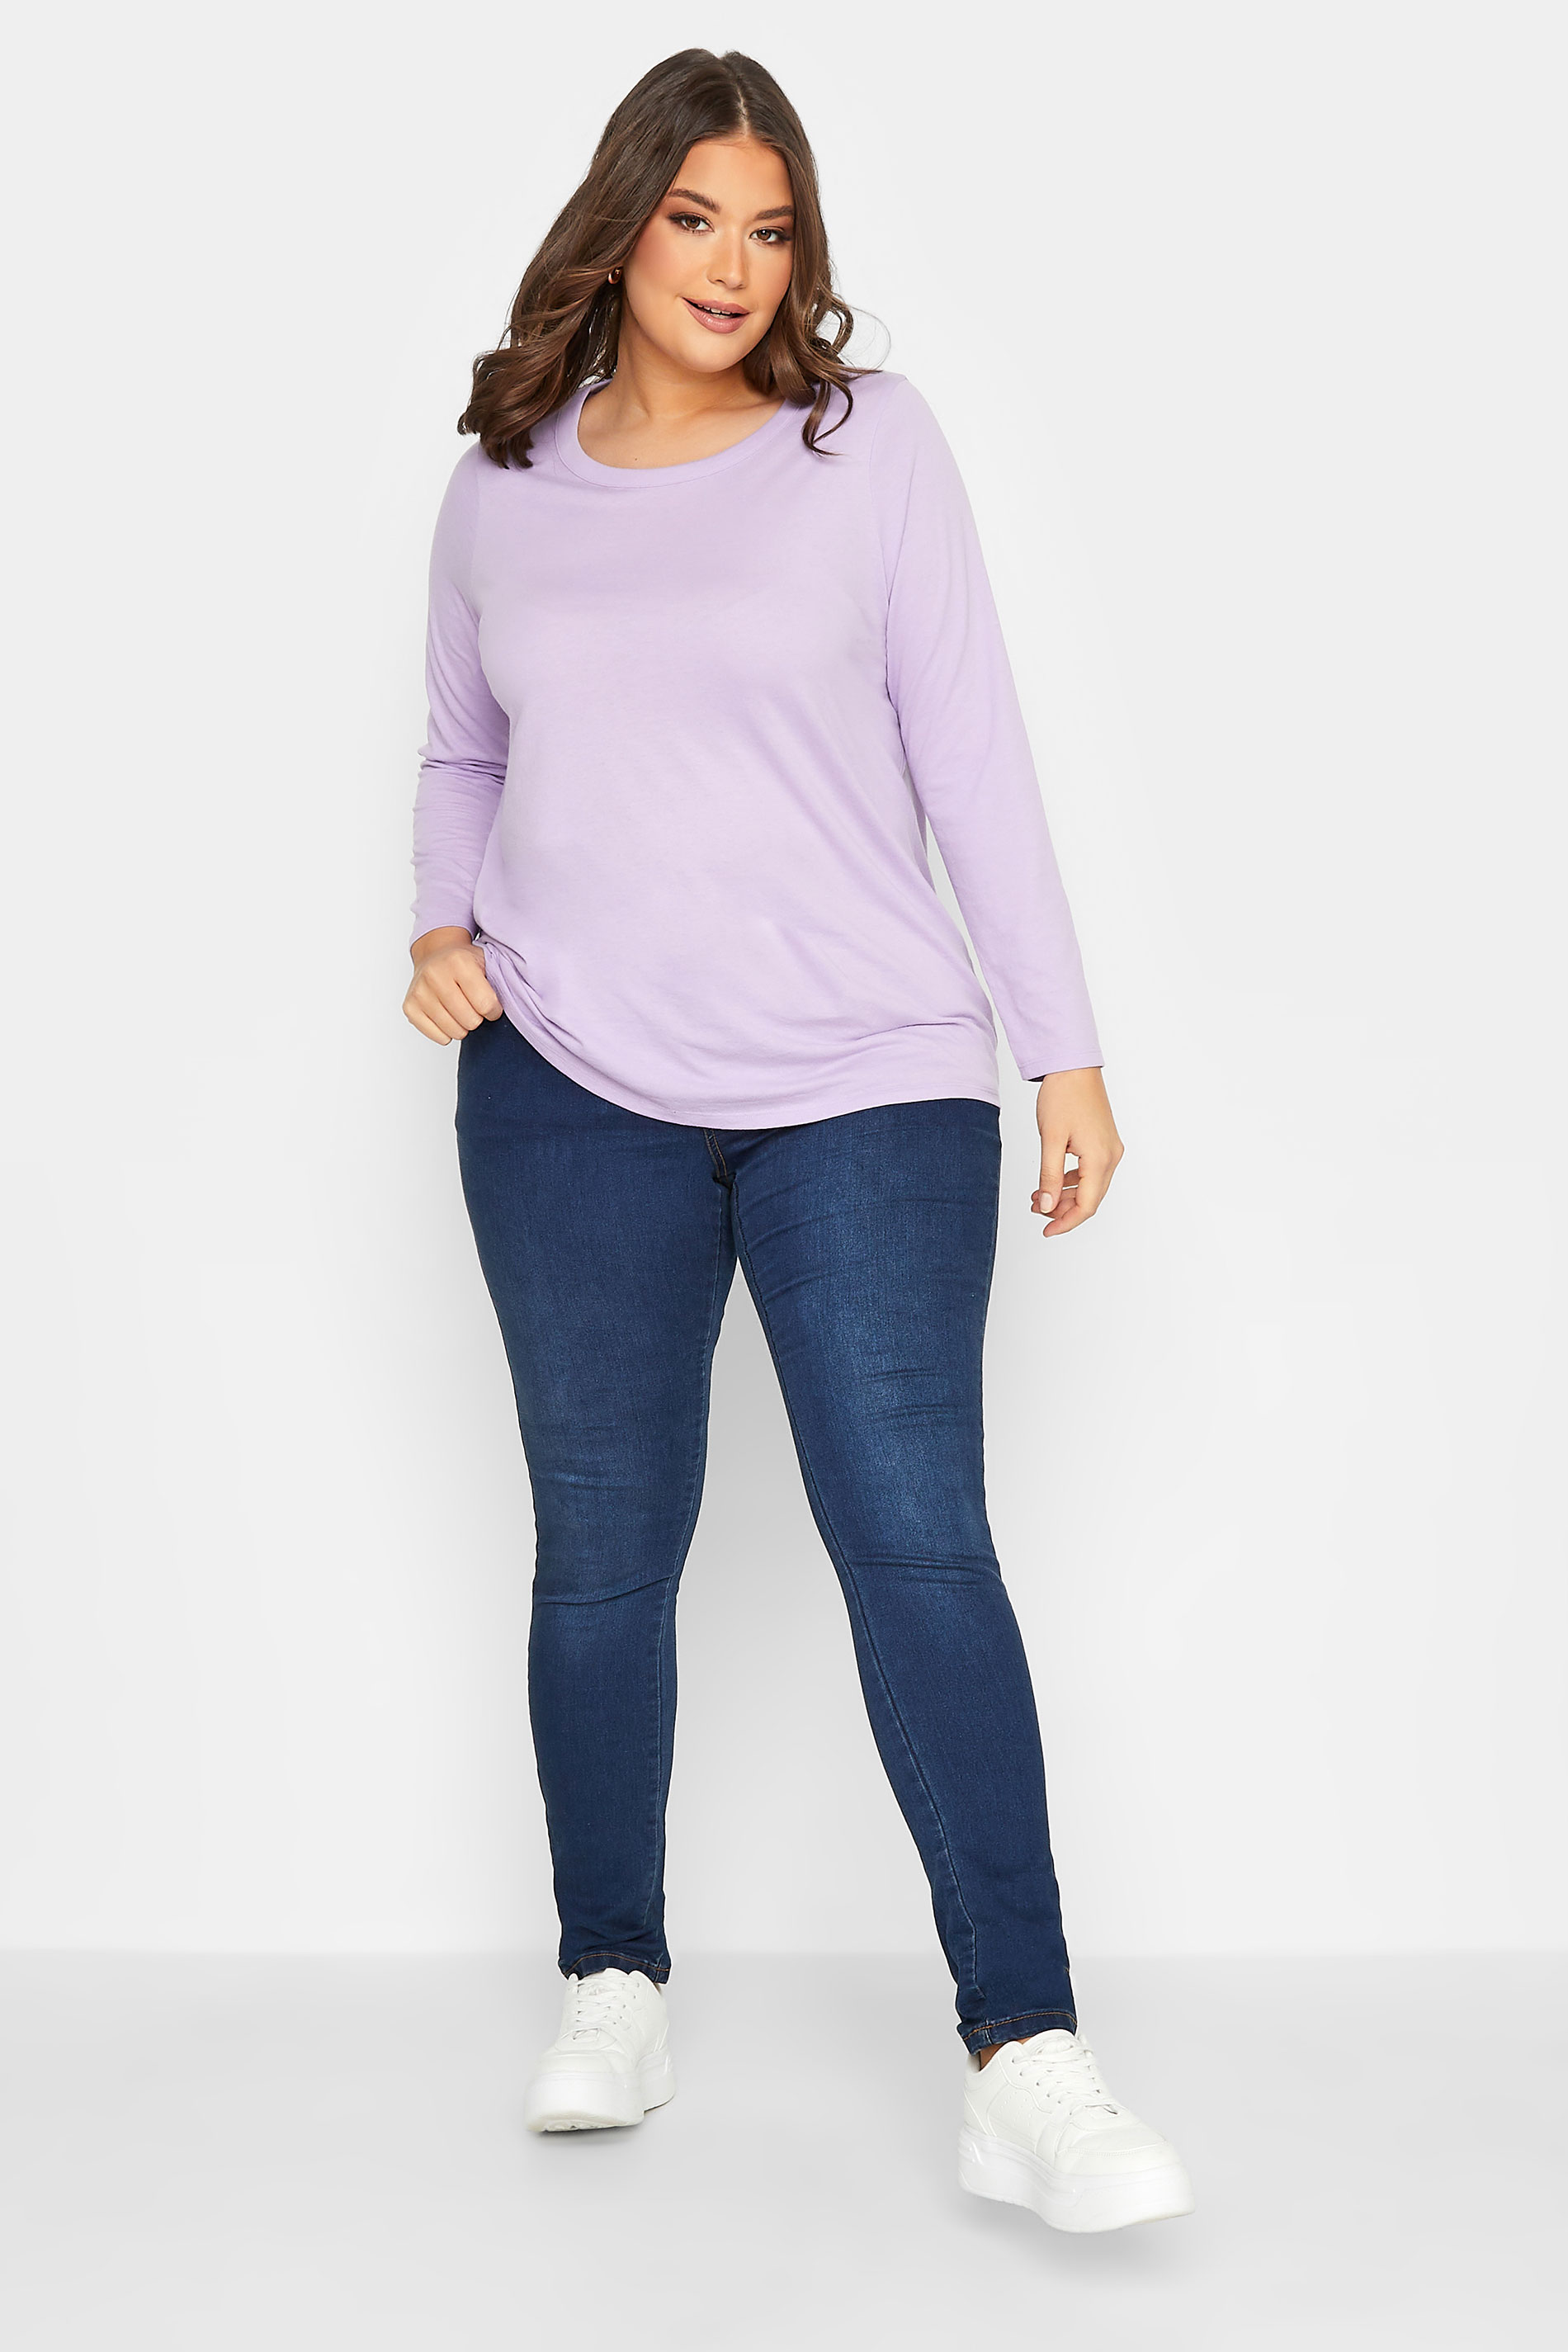 Plus Size Lavender Purple Long Sleeve T-Shirt | Yours Clothing 2